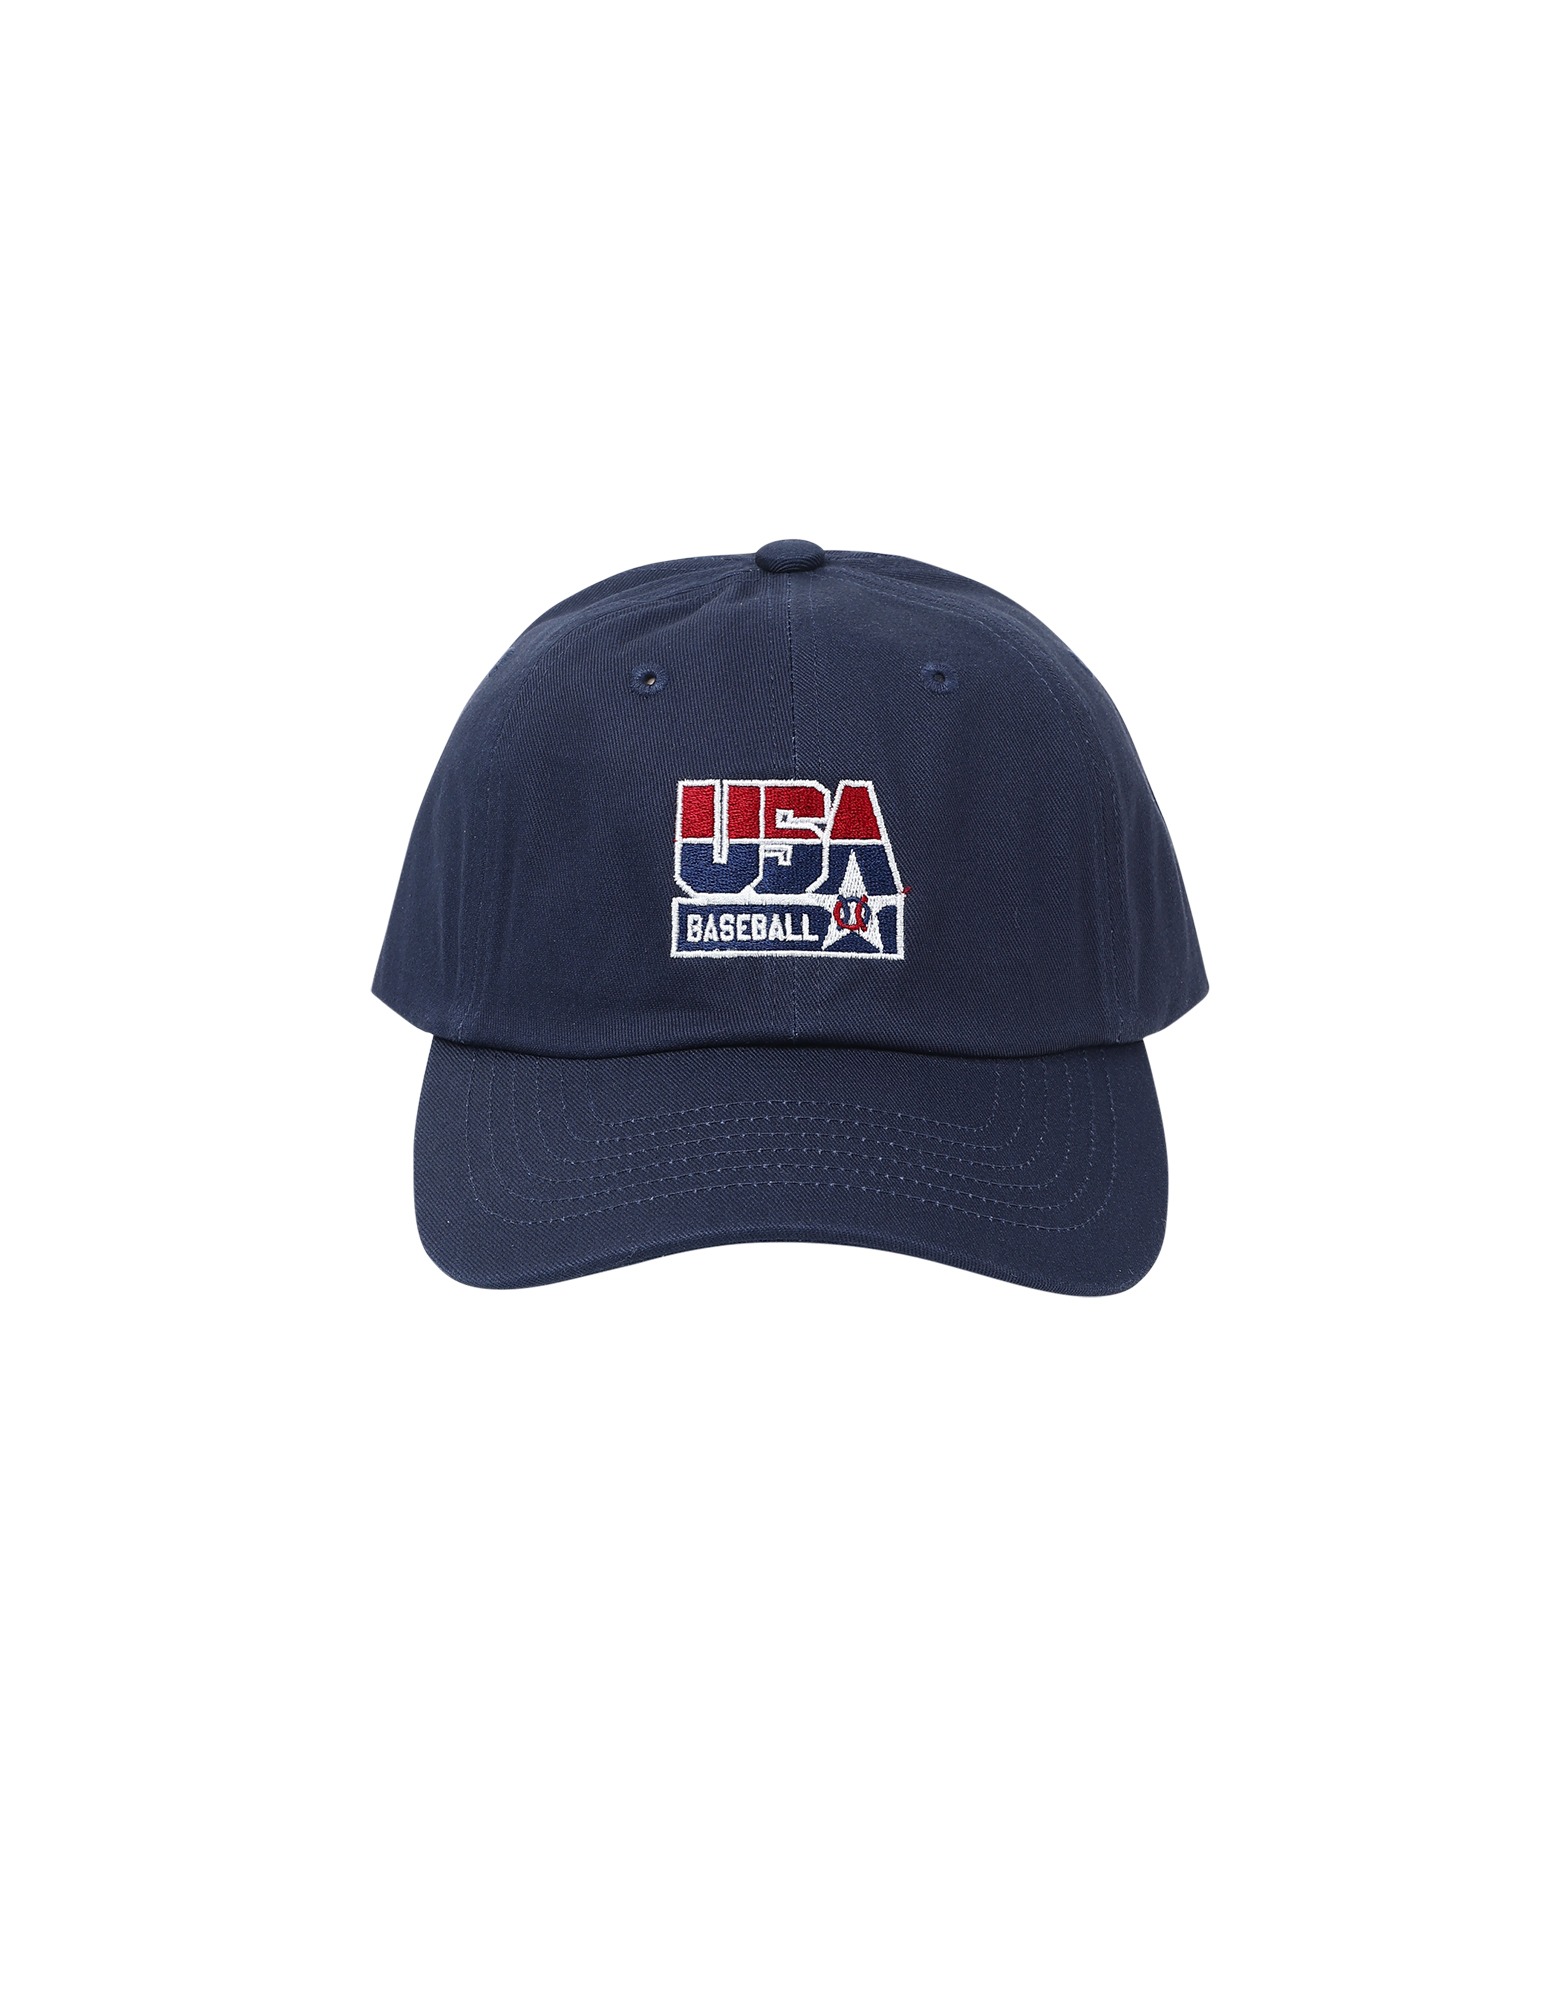 USA BB Cap (Navy)